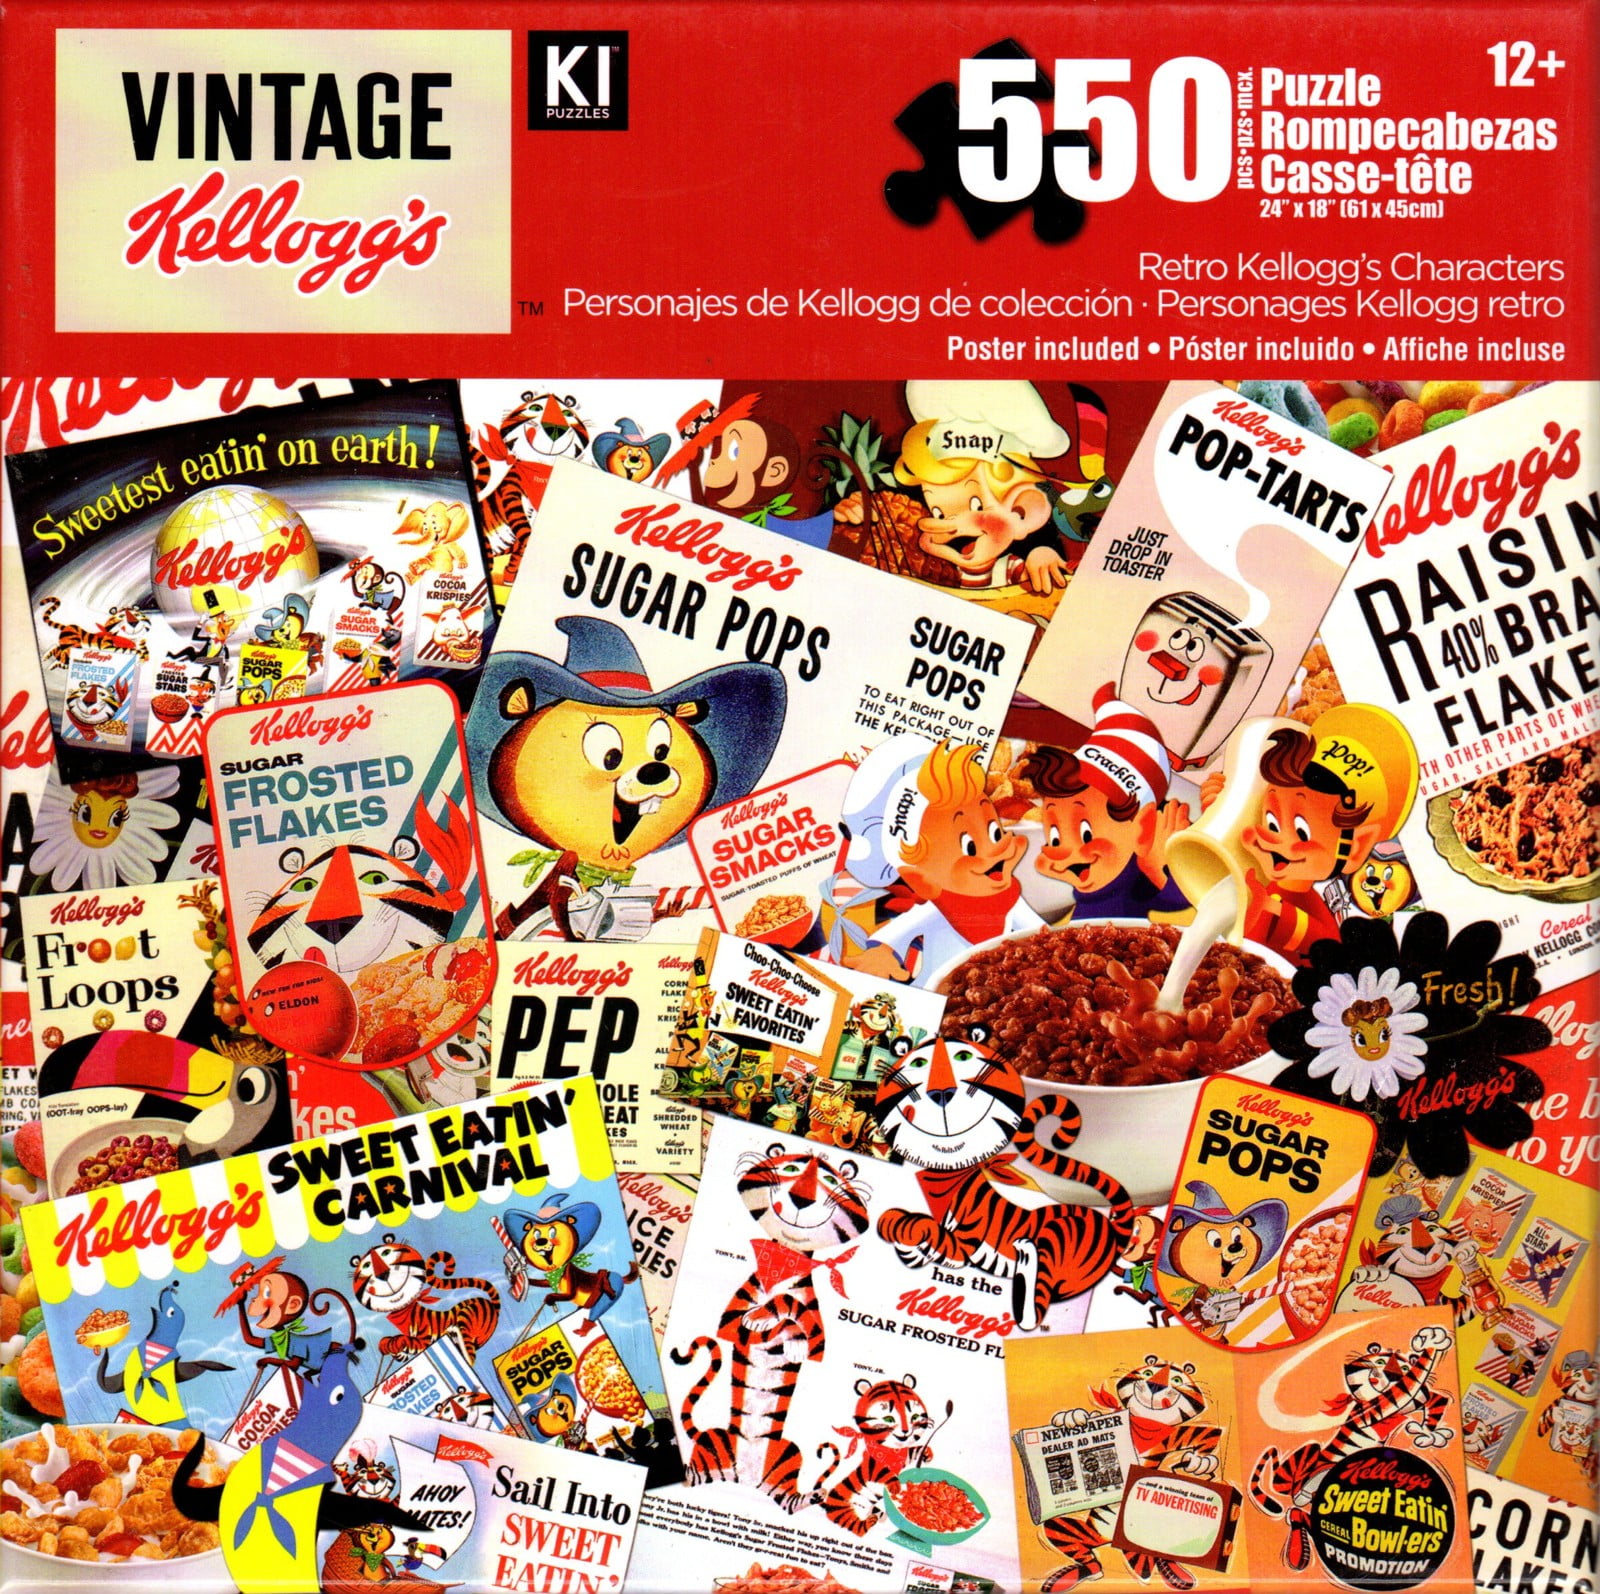 Vintage Kellogg's Retro Kellogg's Characters 550 Piece Jigsaw Puzzle 24"X18" New 